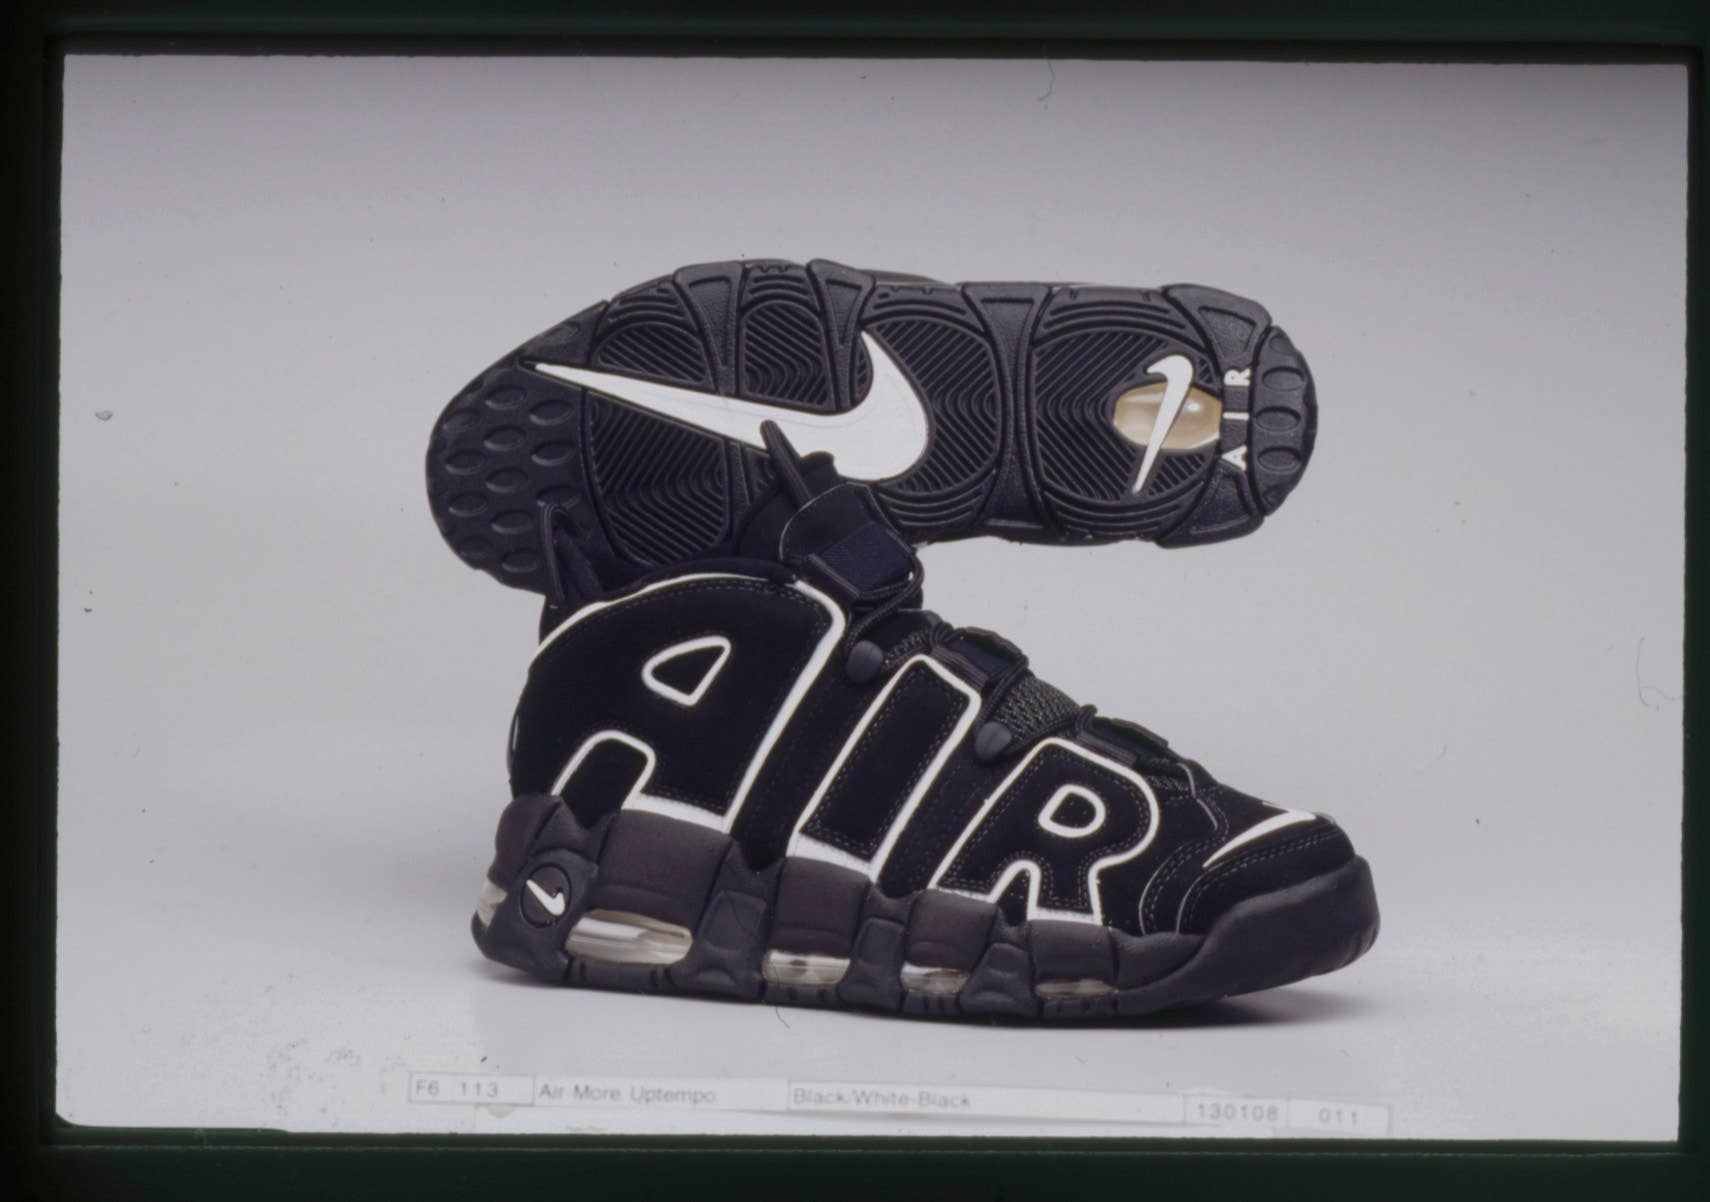 Scottie Pippen told through his sneakers